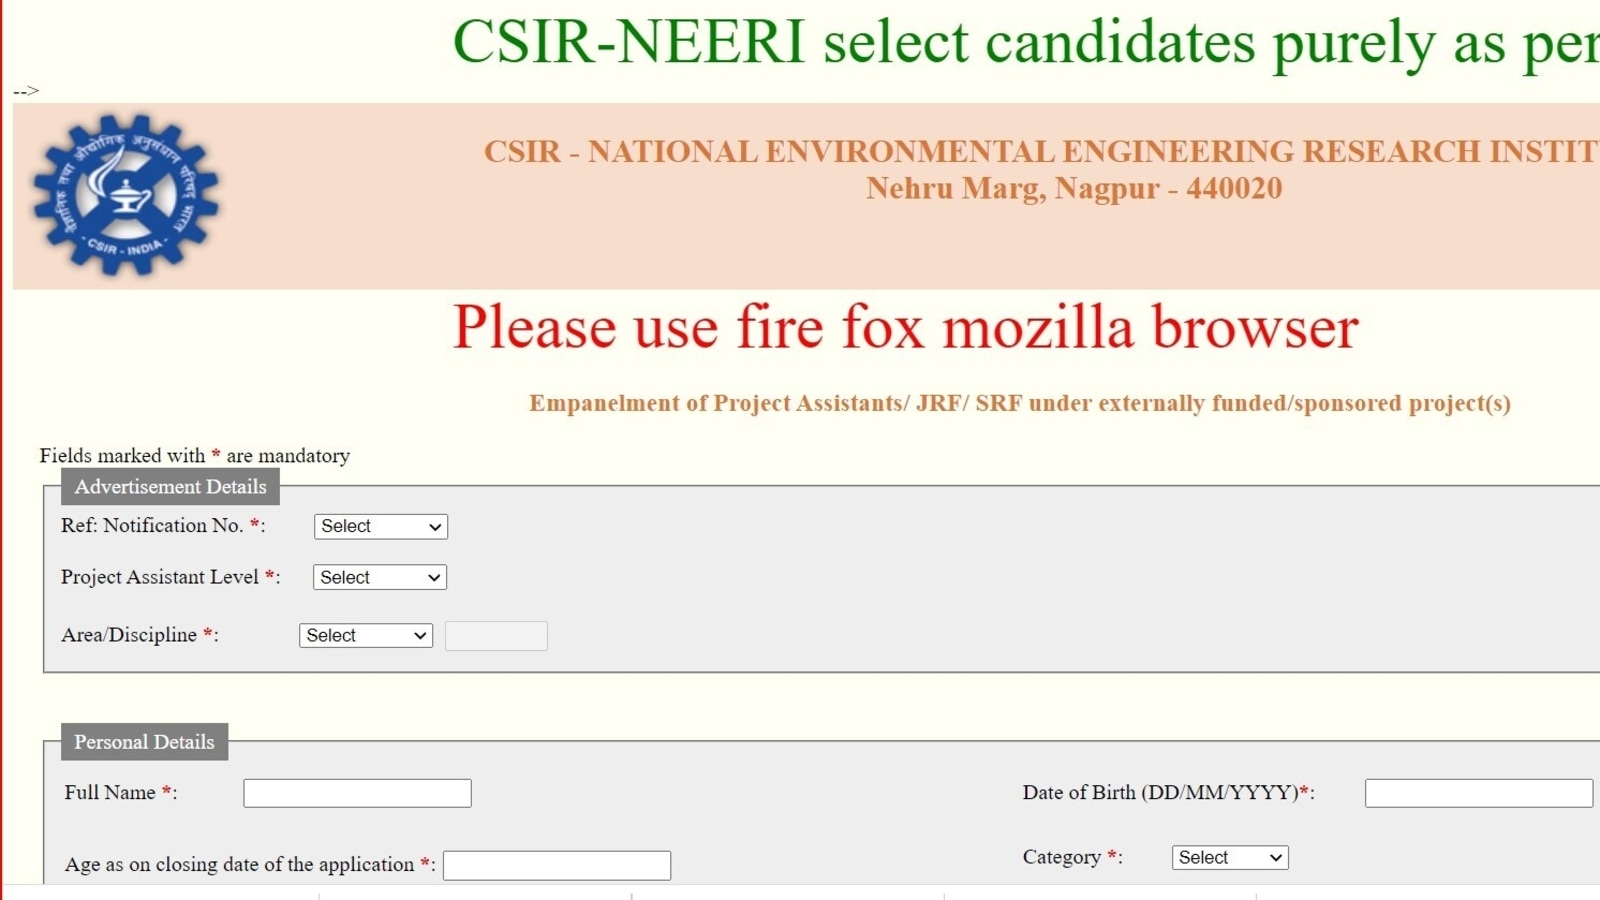 CSIR NEERI recruitment: 13 vacancies for project assistant, associate on offer